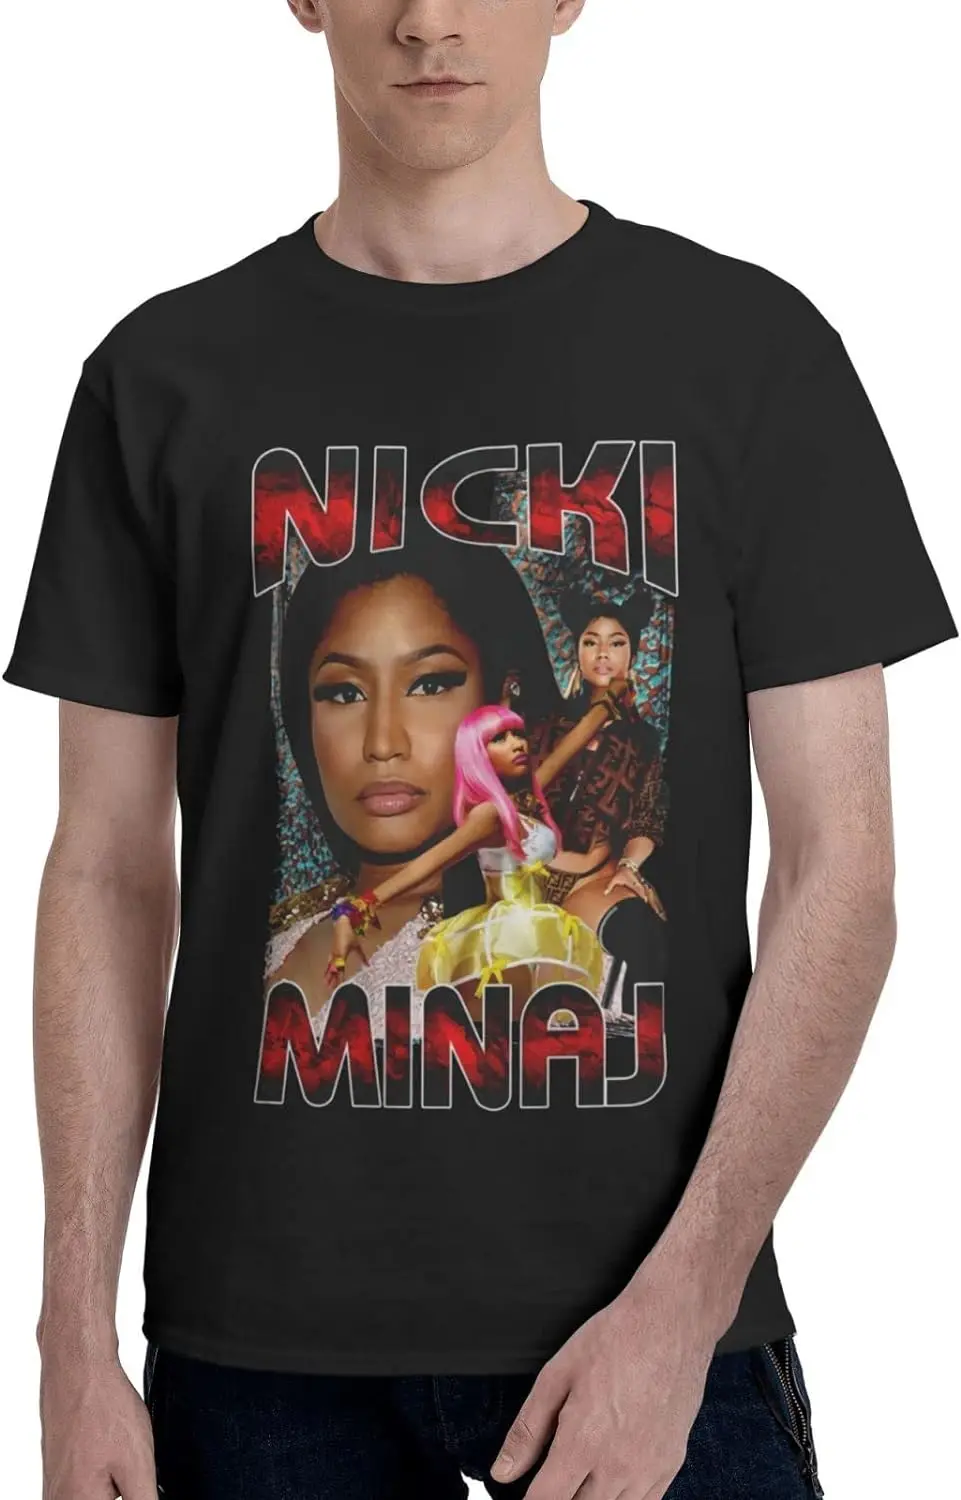 

Nicki Rapper Singer Minaj Band Men's T Shirt Cotton Graphic Short Sleeve Clothing X-Large Black